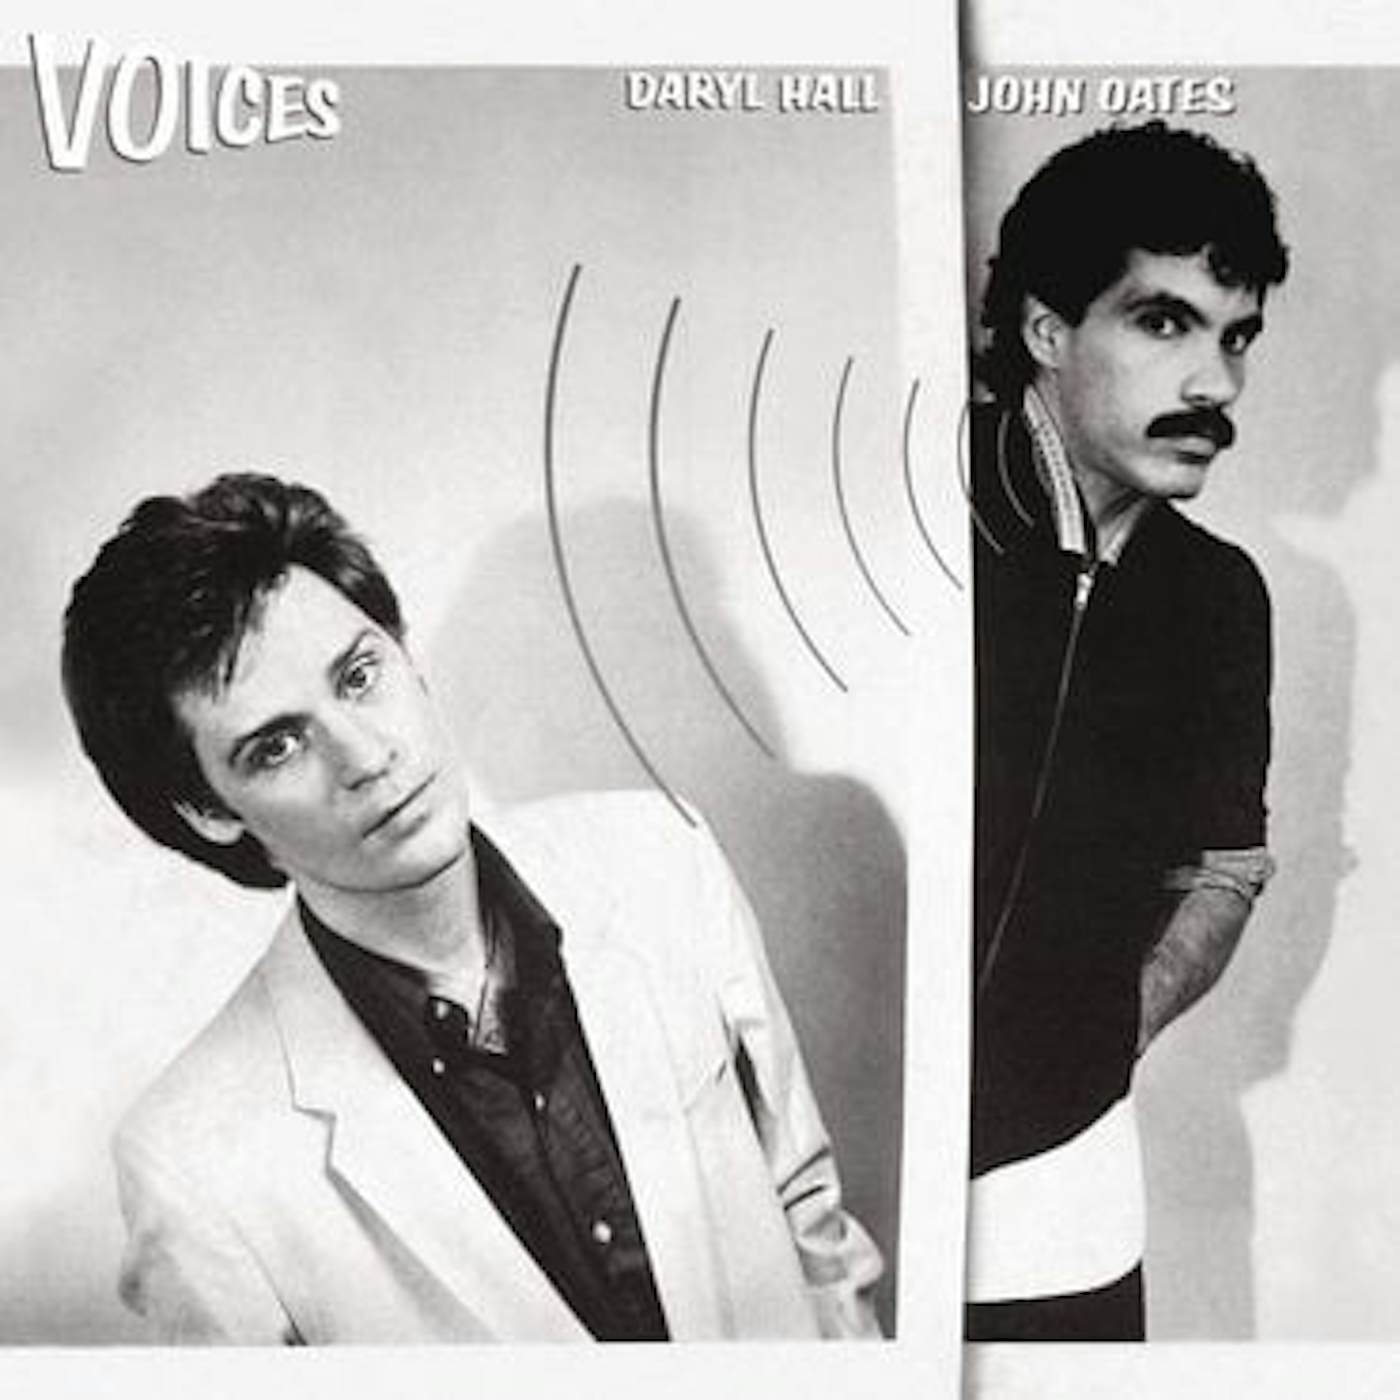 Daryl Hall & John Oates Voices Vinyl Record